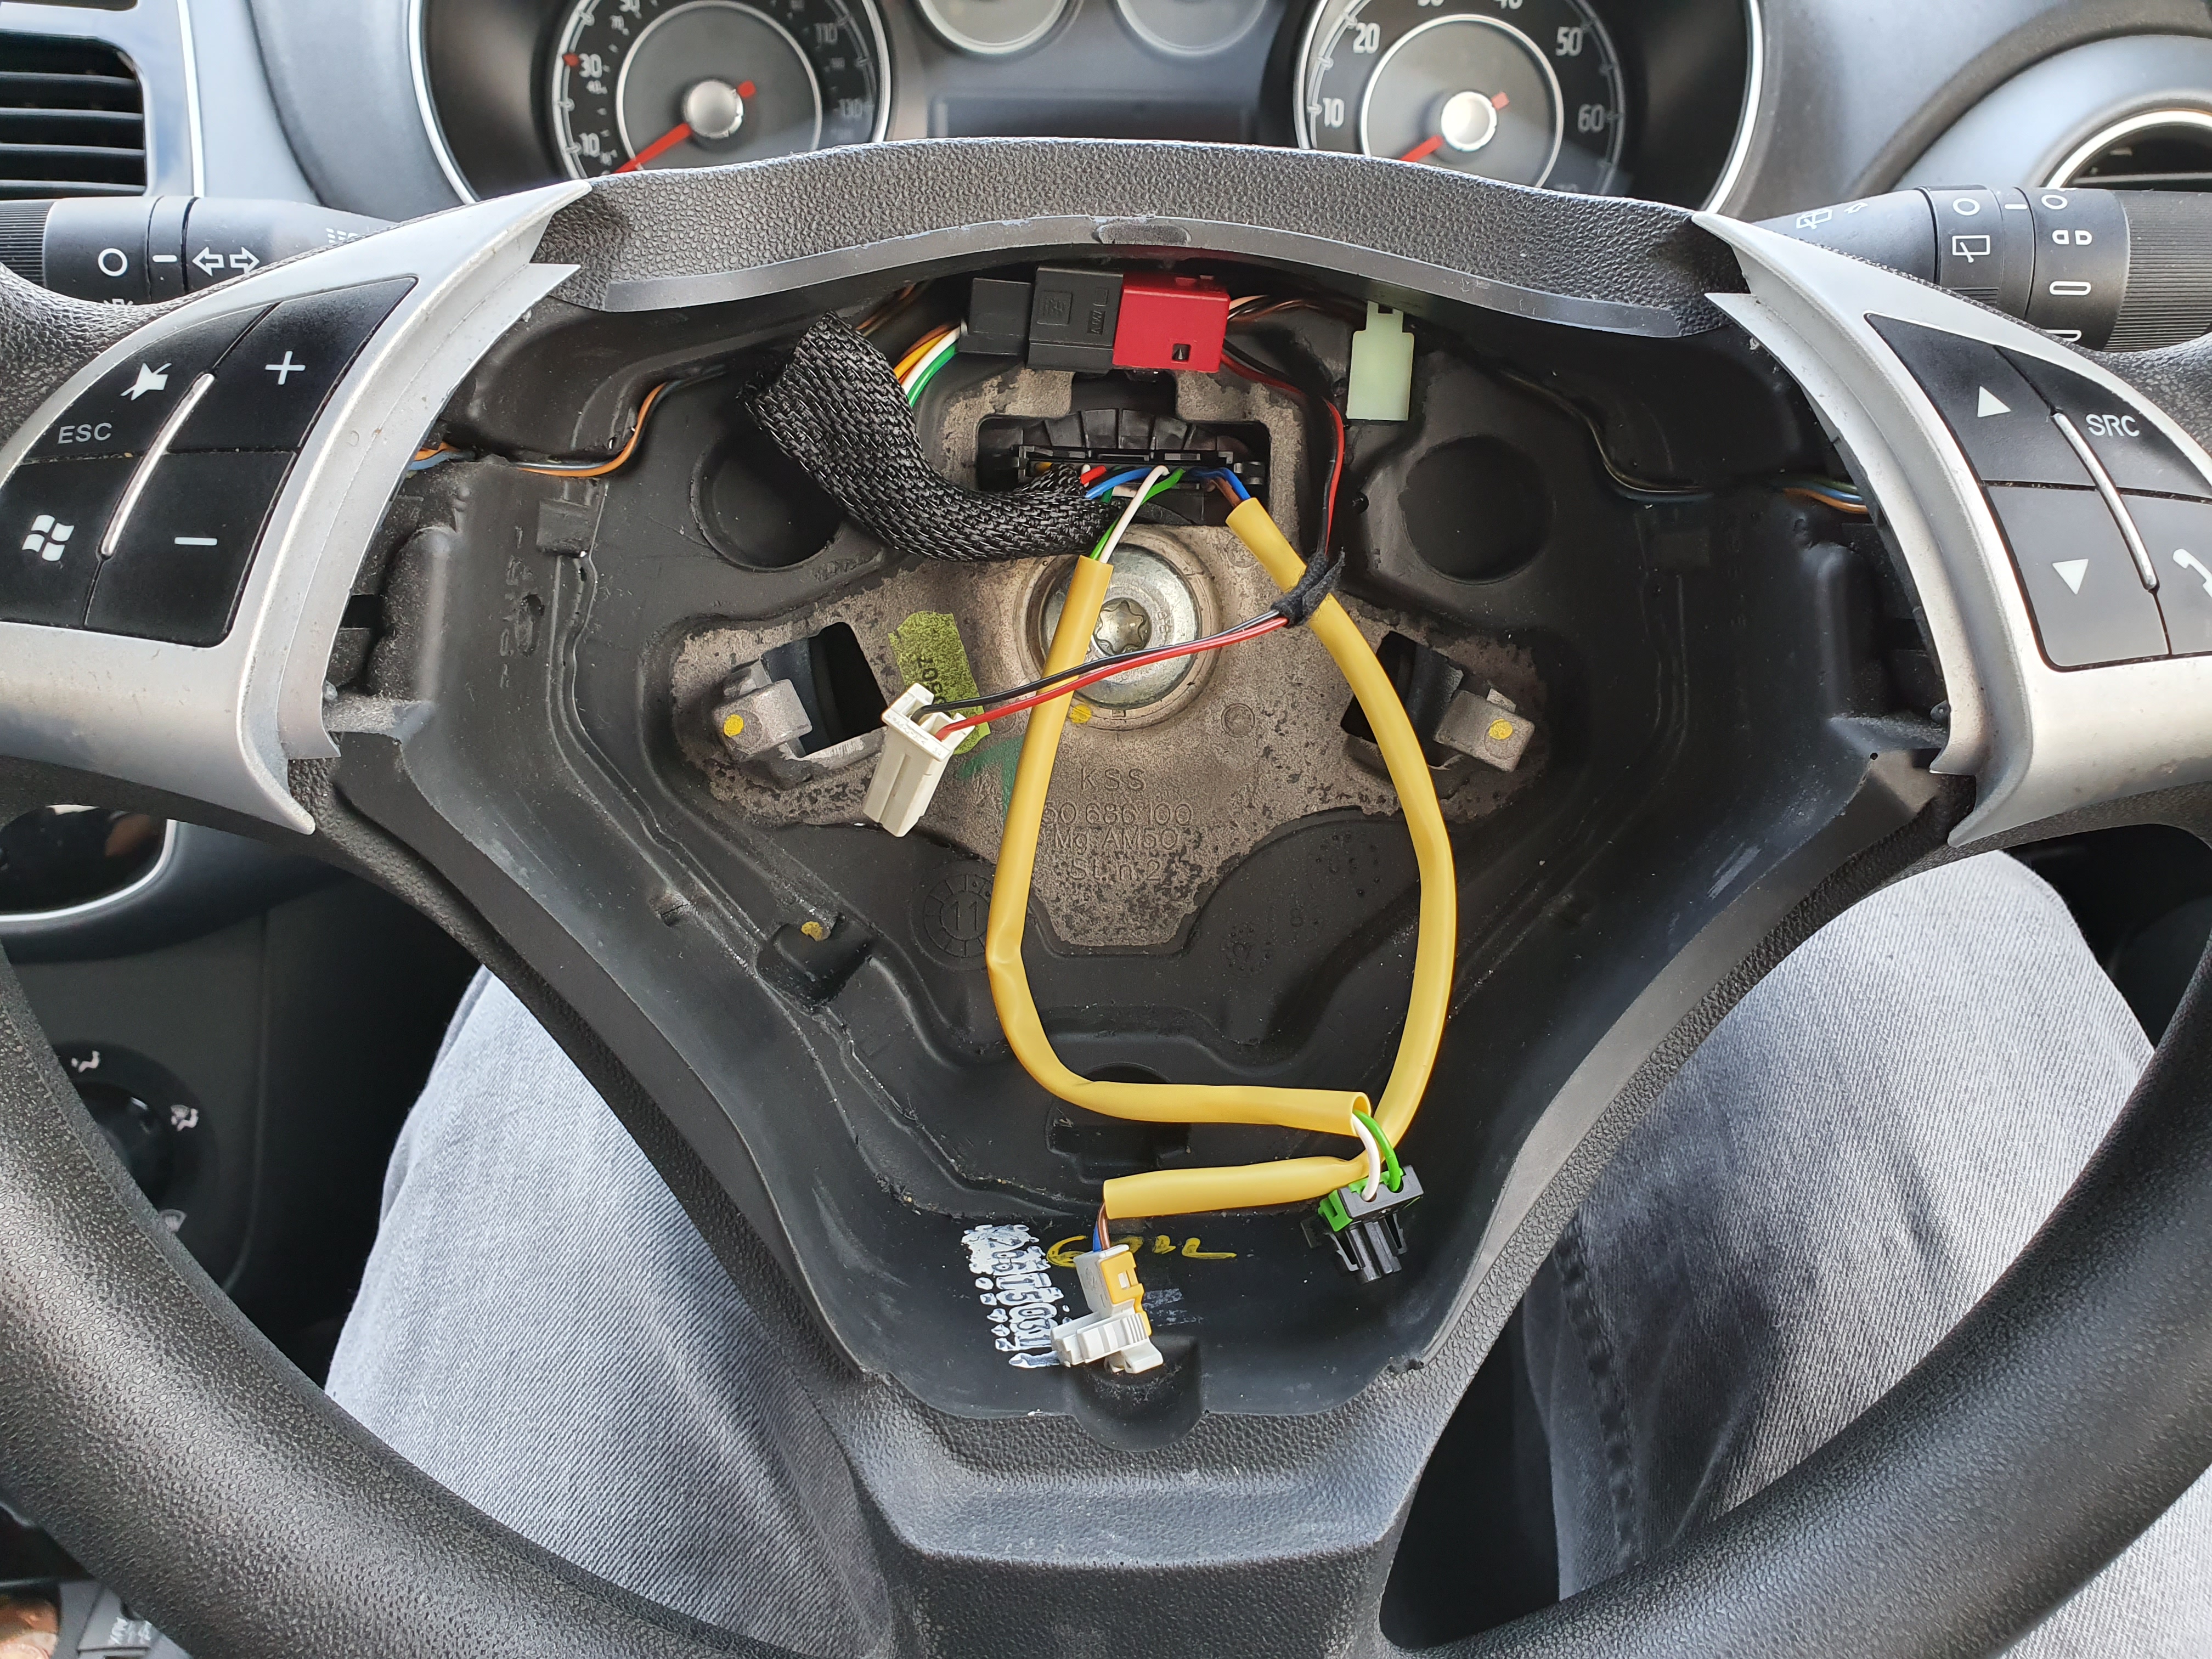 Airbag wires FIAT Punto Evo | The FIAT Forum